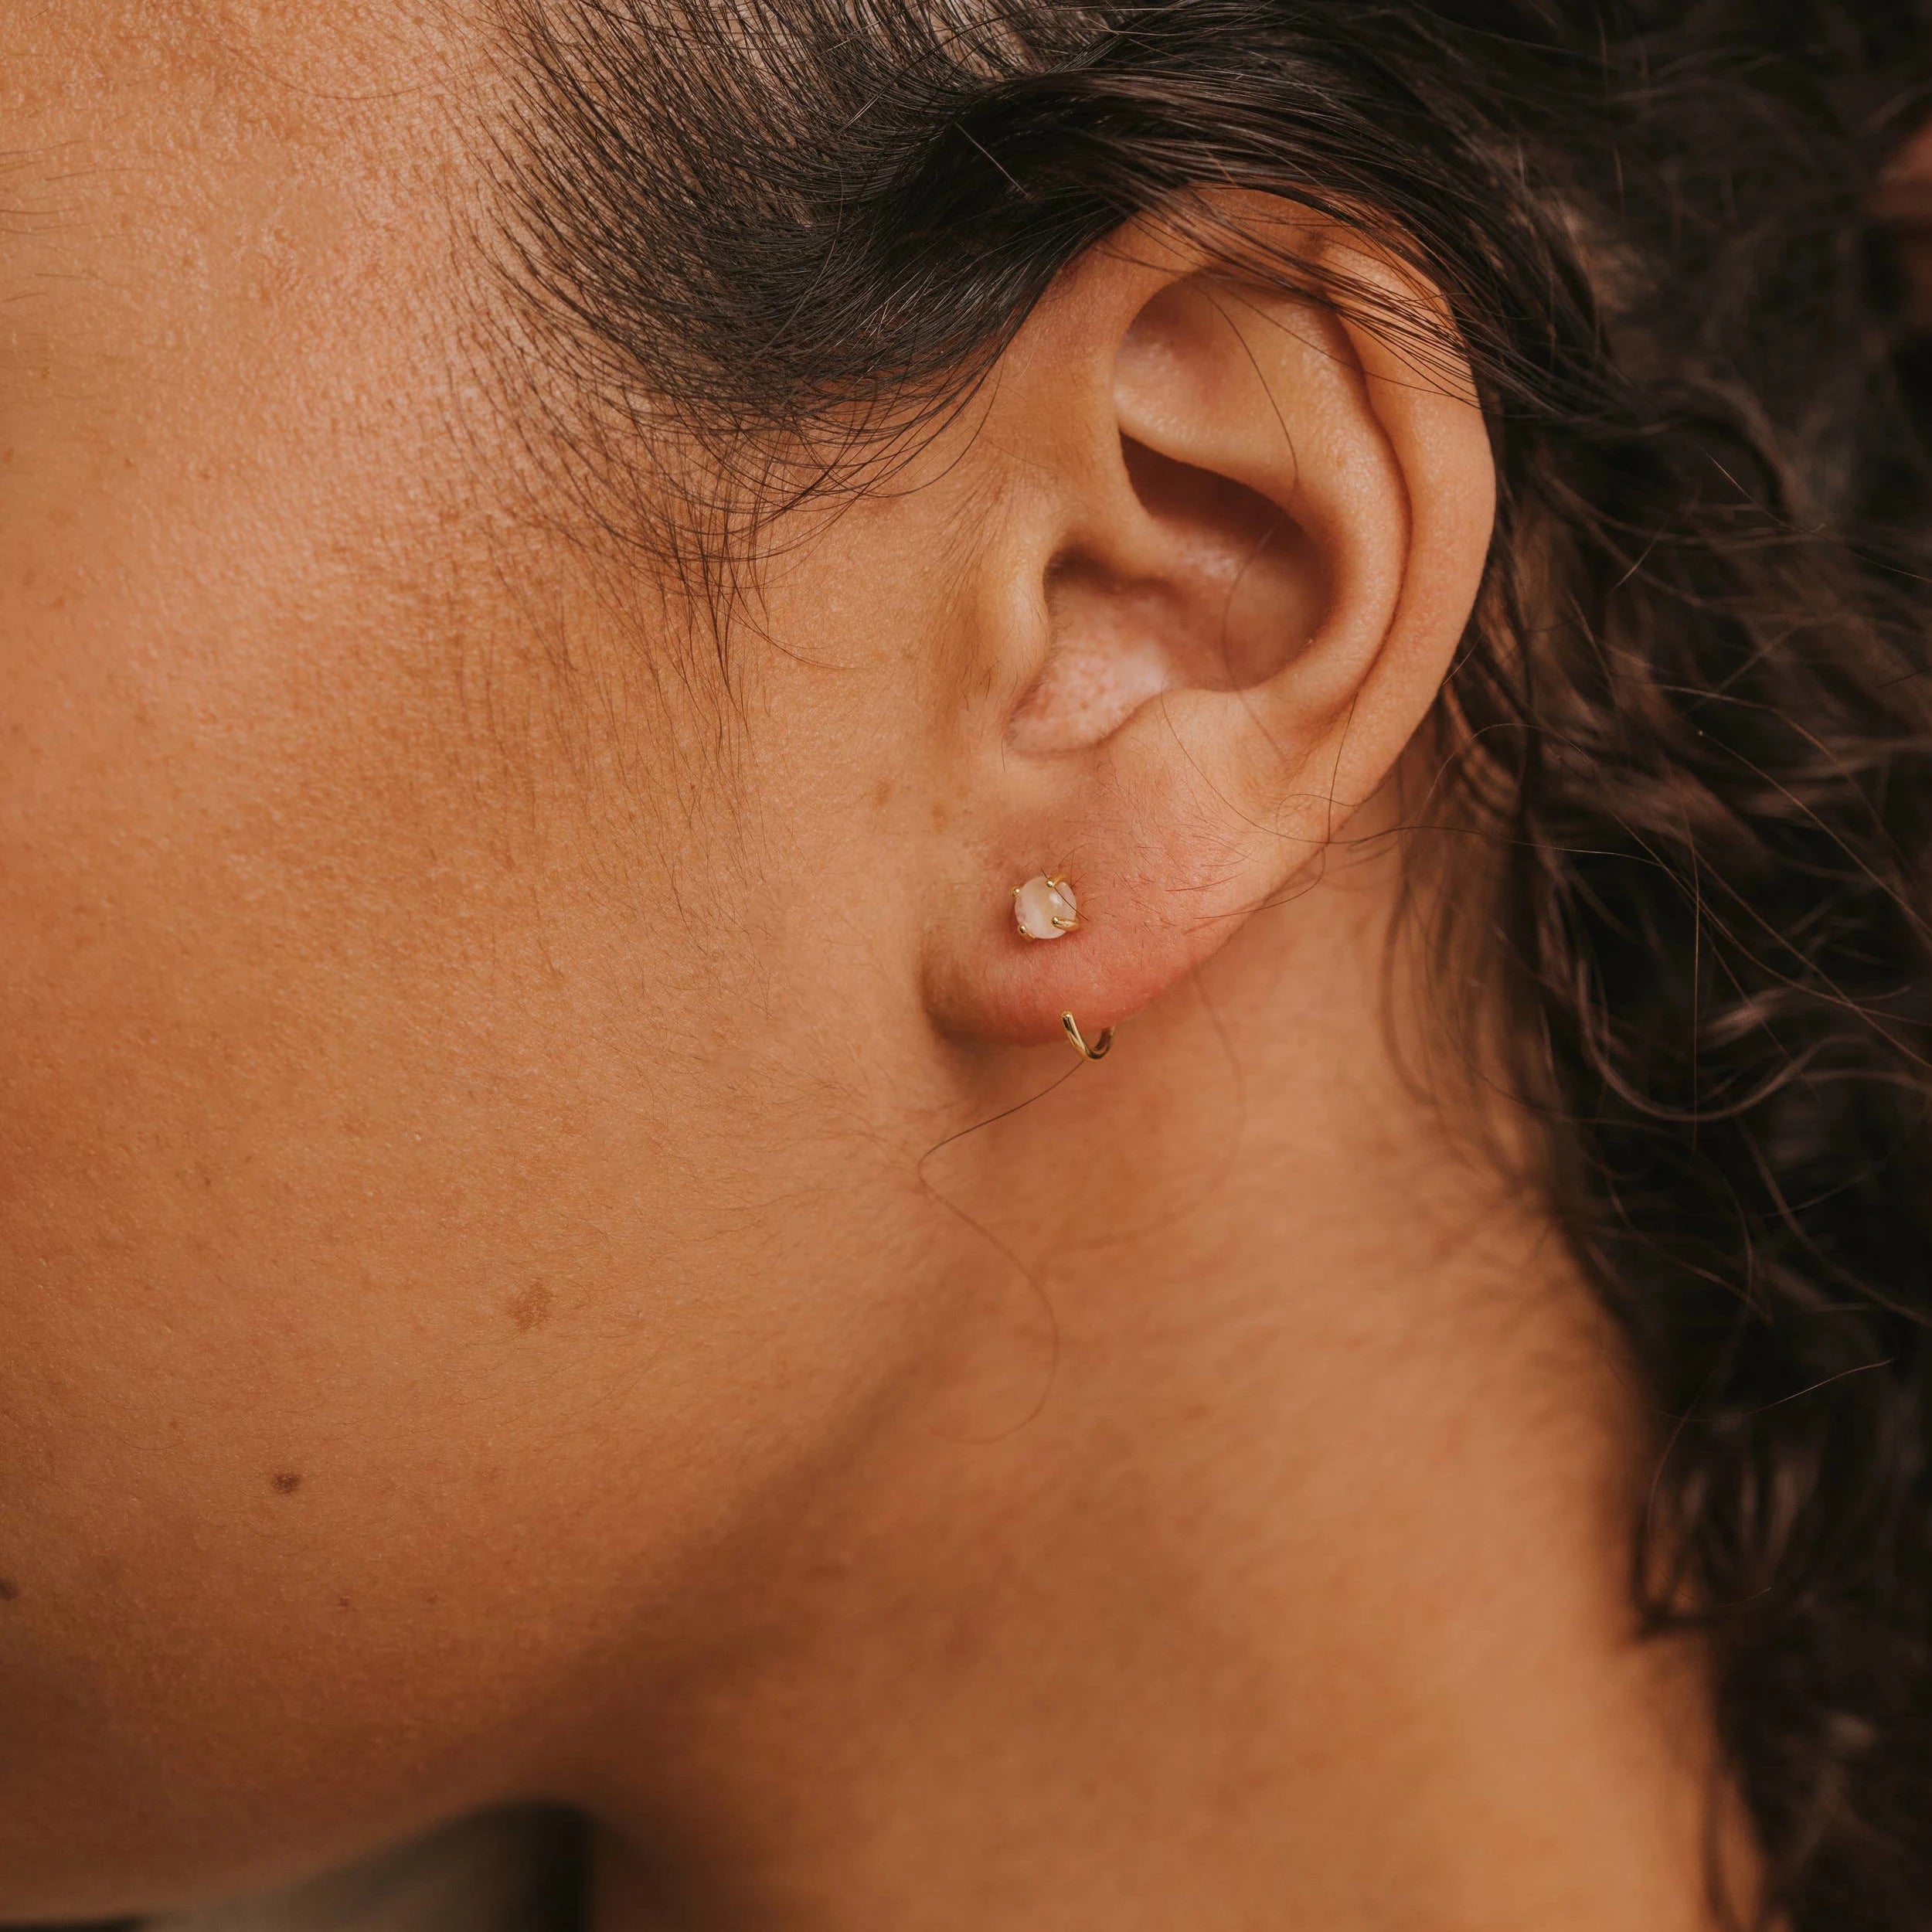 Model wearing the rose quartz huggies earrings. 